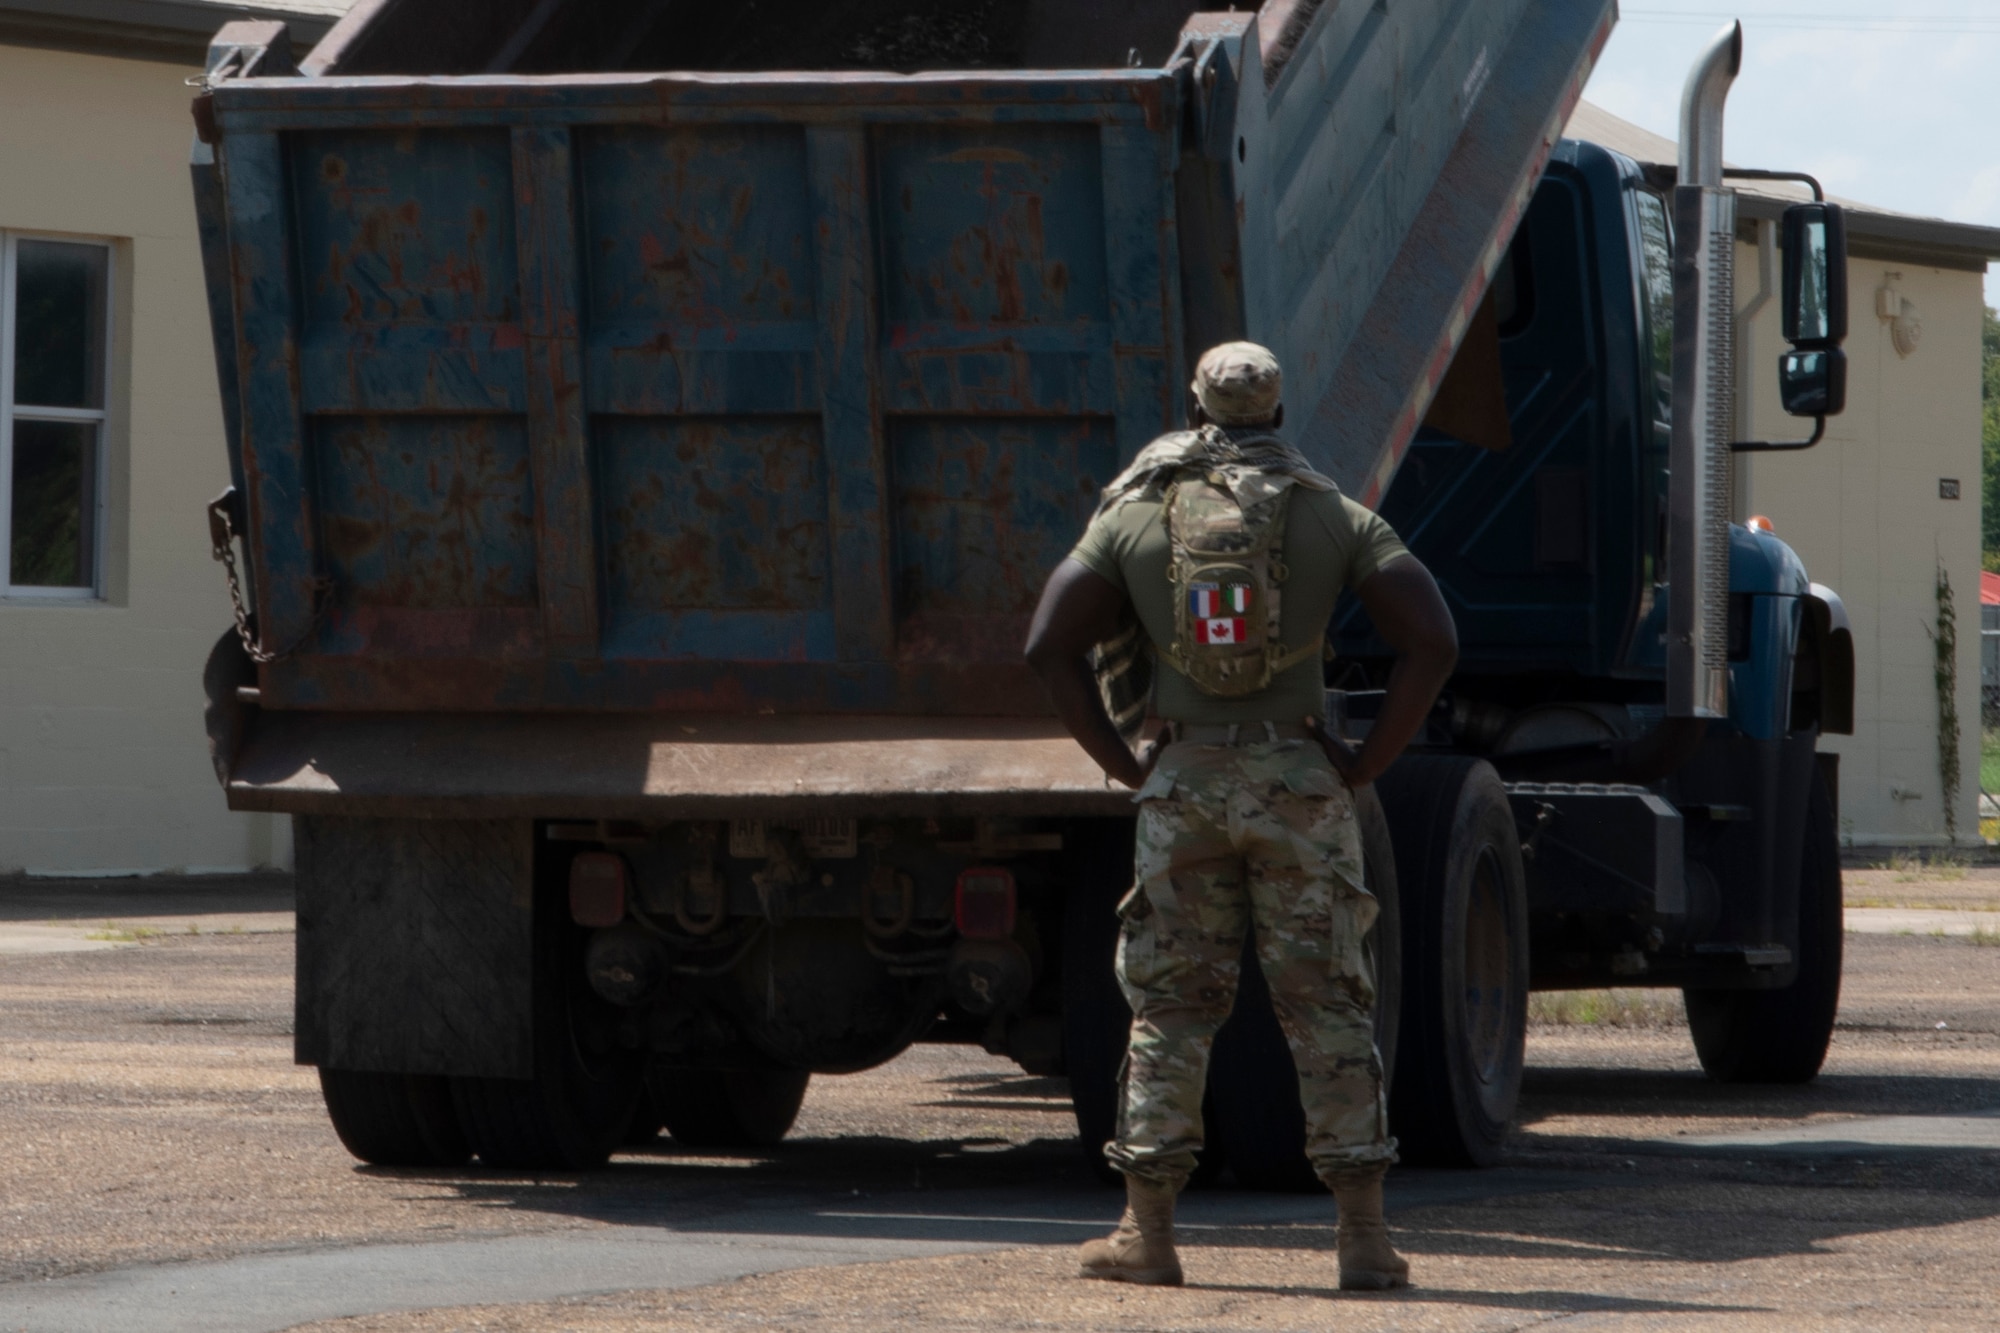 Photo of Airman standing behind a dump truck.